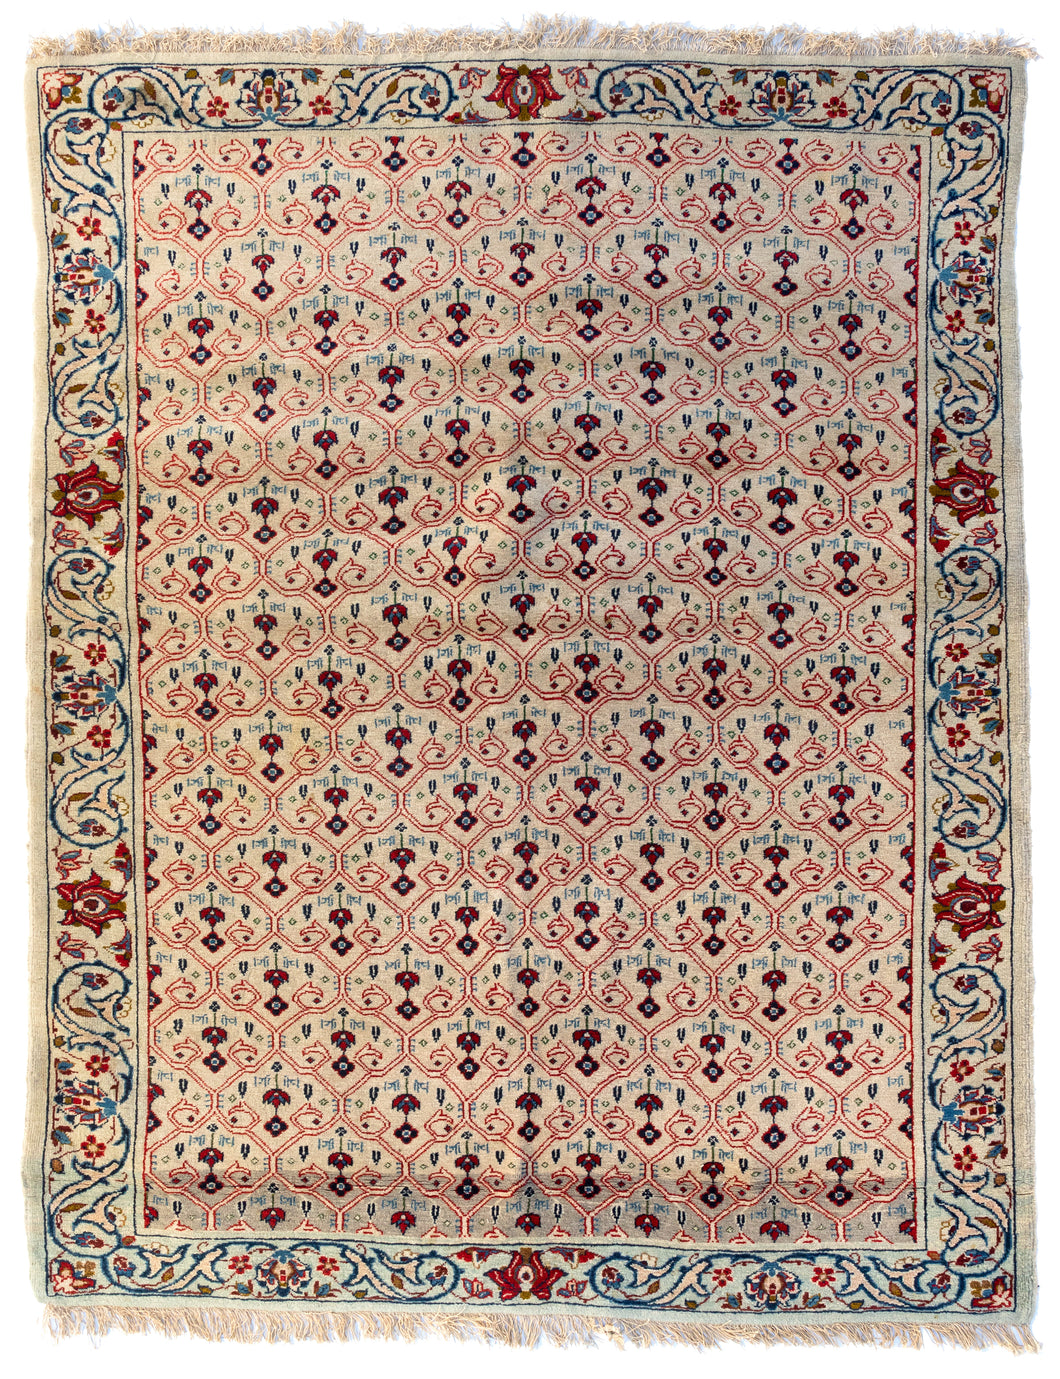 Antique Kashan Carpet